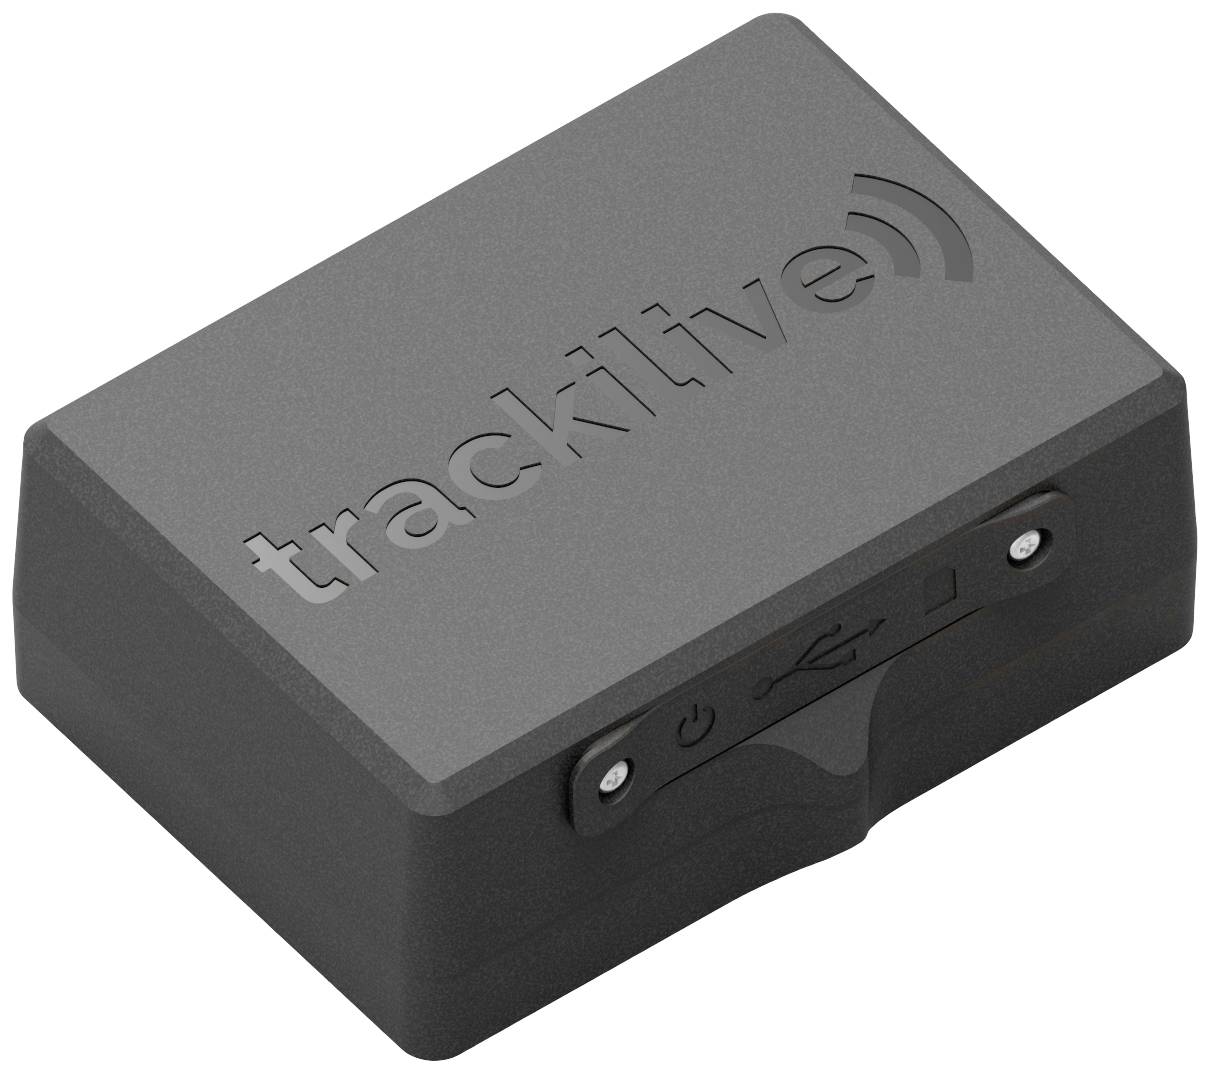 Trackilive TL60 GPS tracker Vehicle tracker, Multifunction tracker